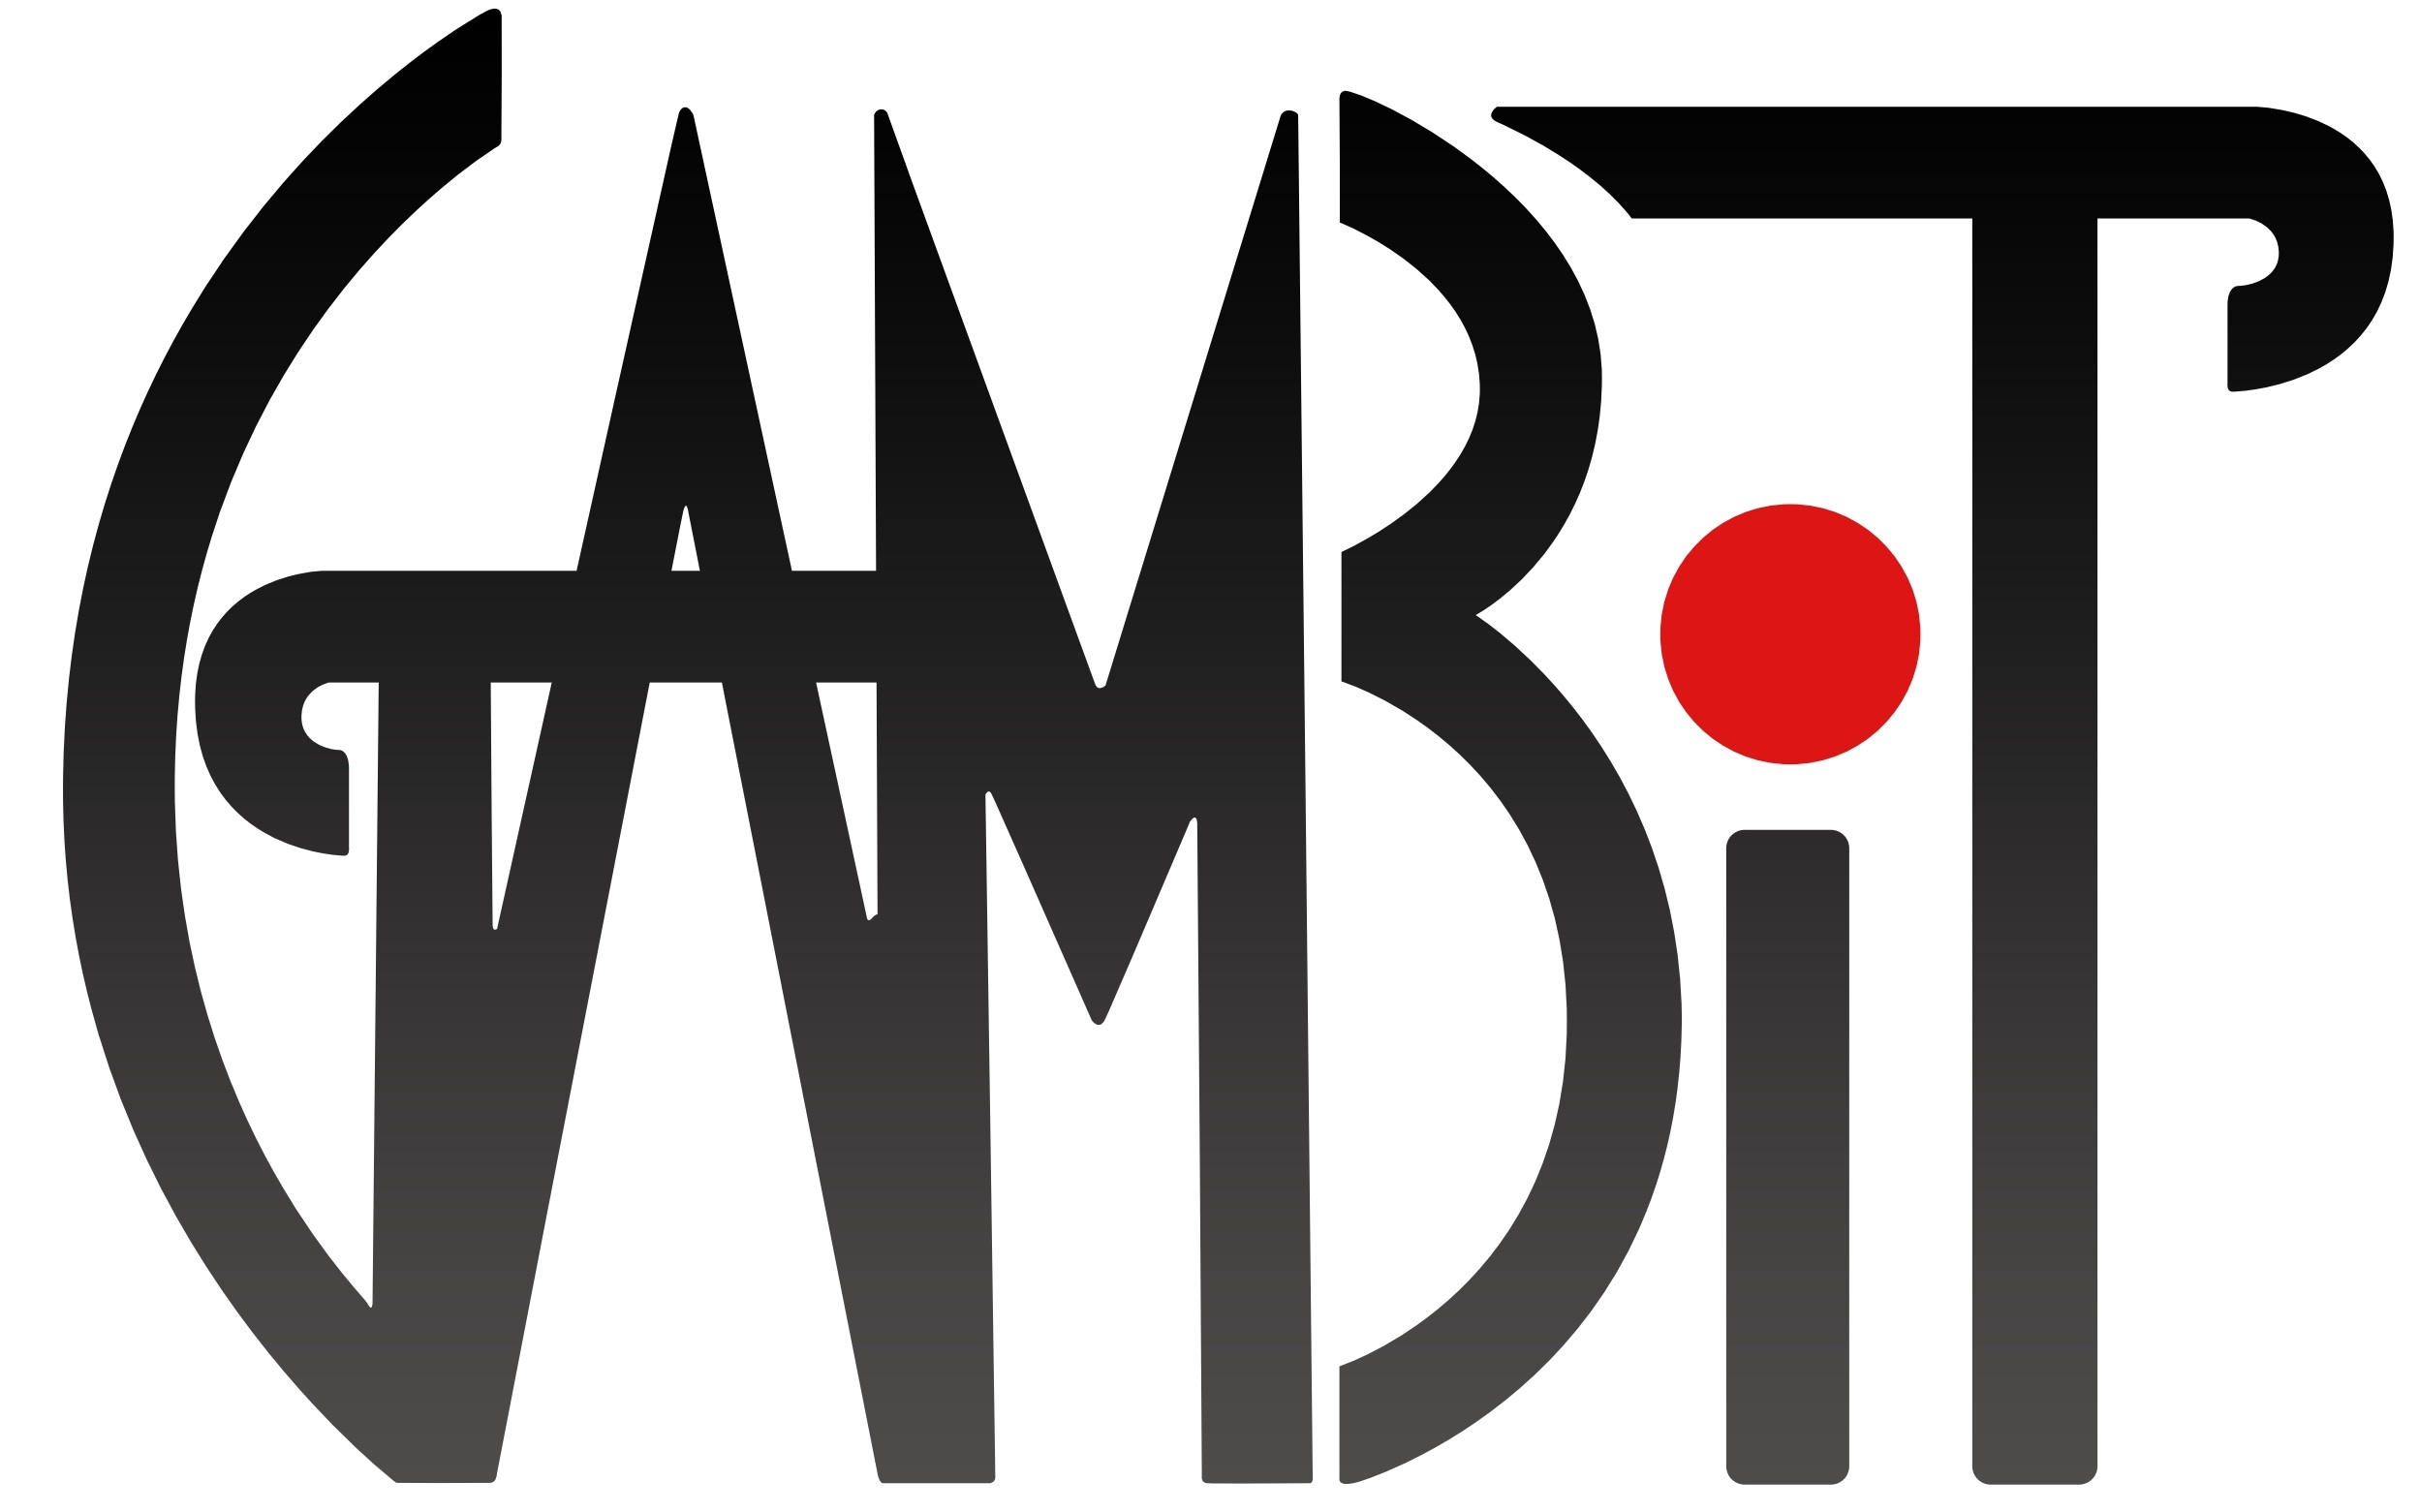 GAMBIT Logo.jpg 48c57b4e061c78da8125e9802400733e